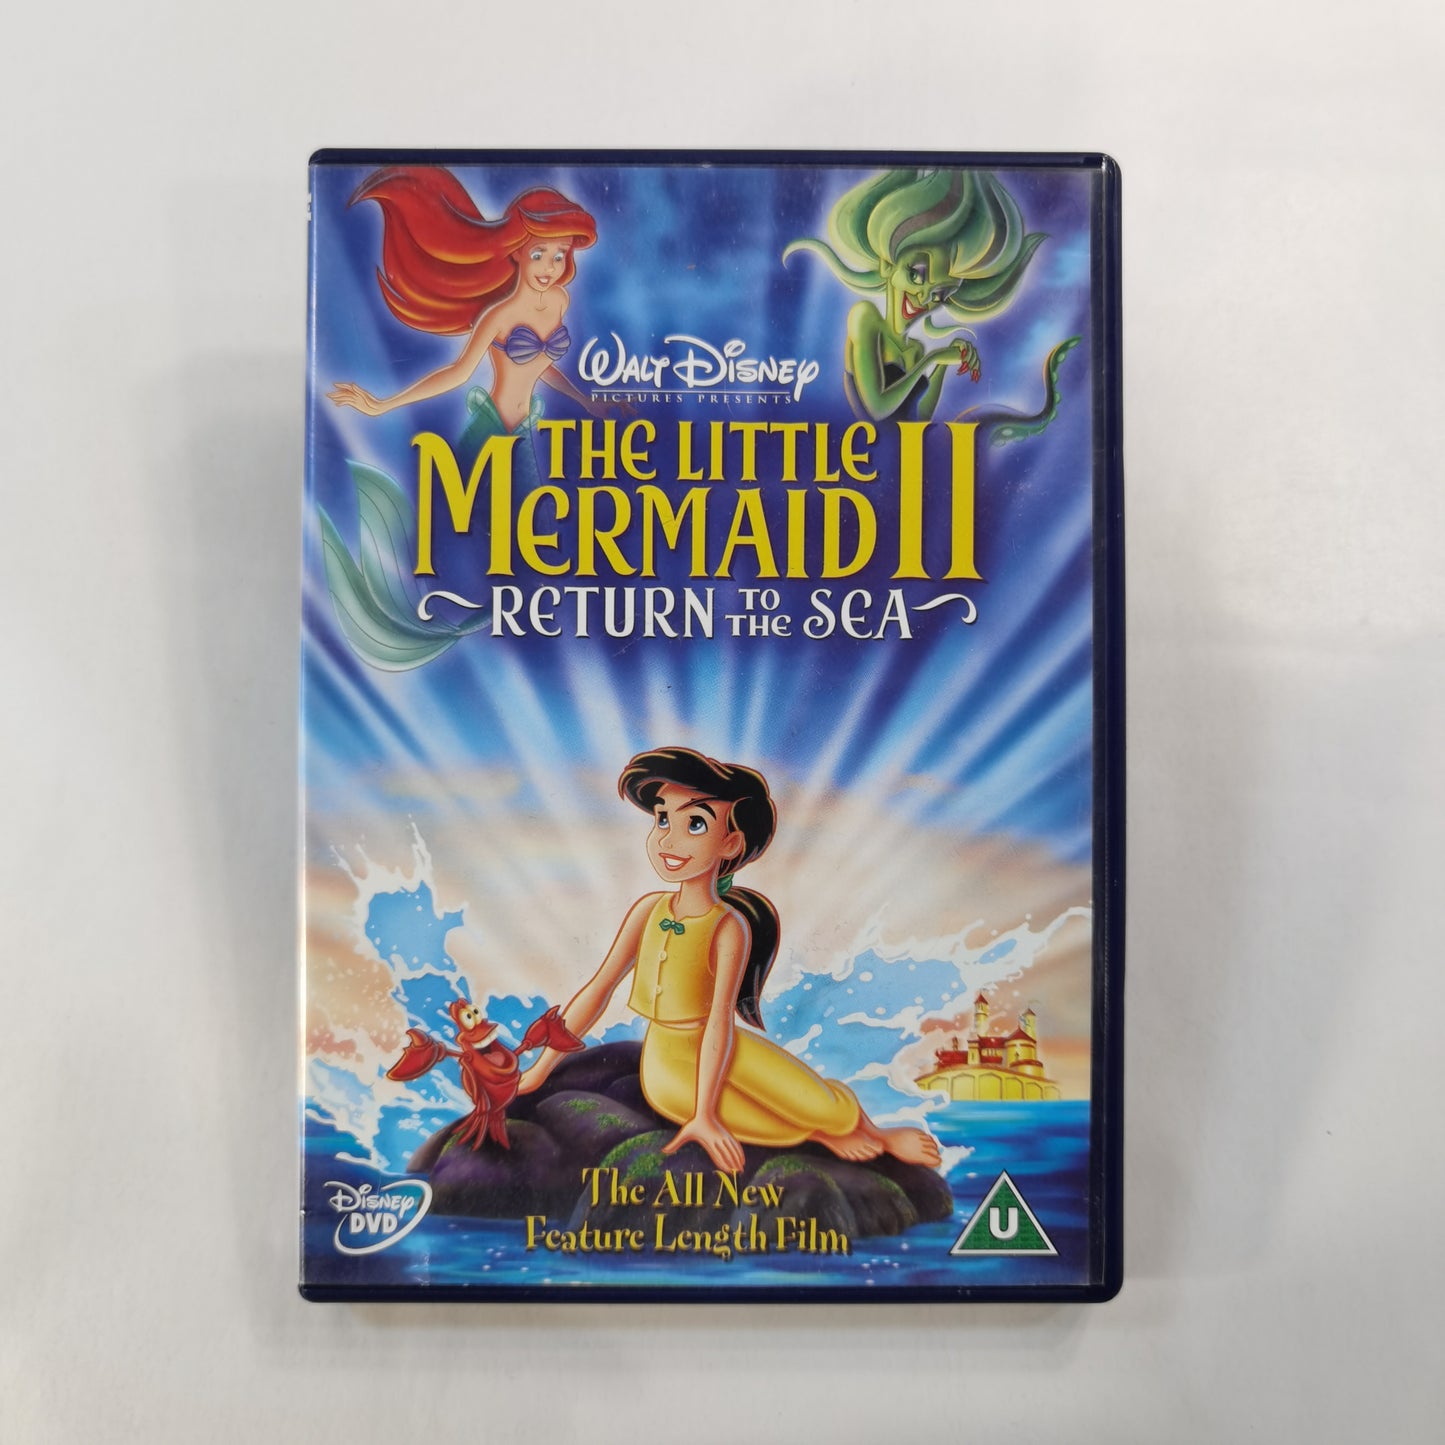 The Little Mermaid 2: Return to the Sea (2000) - DVD UK